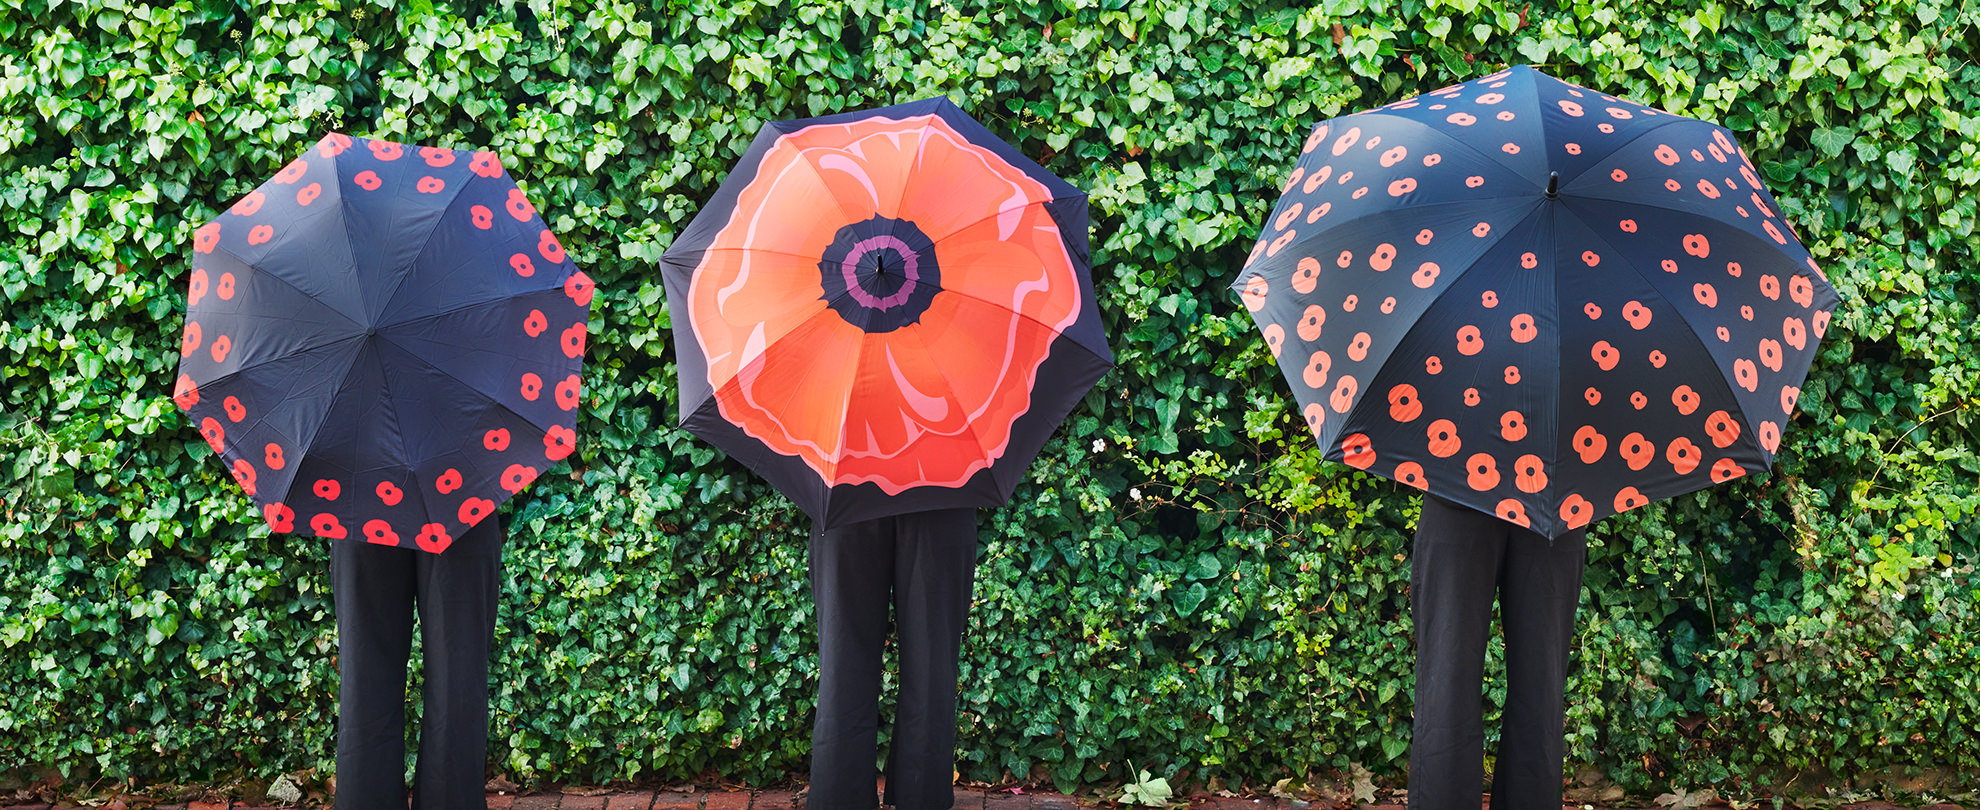 Poppy Umbrellas